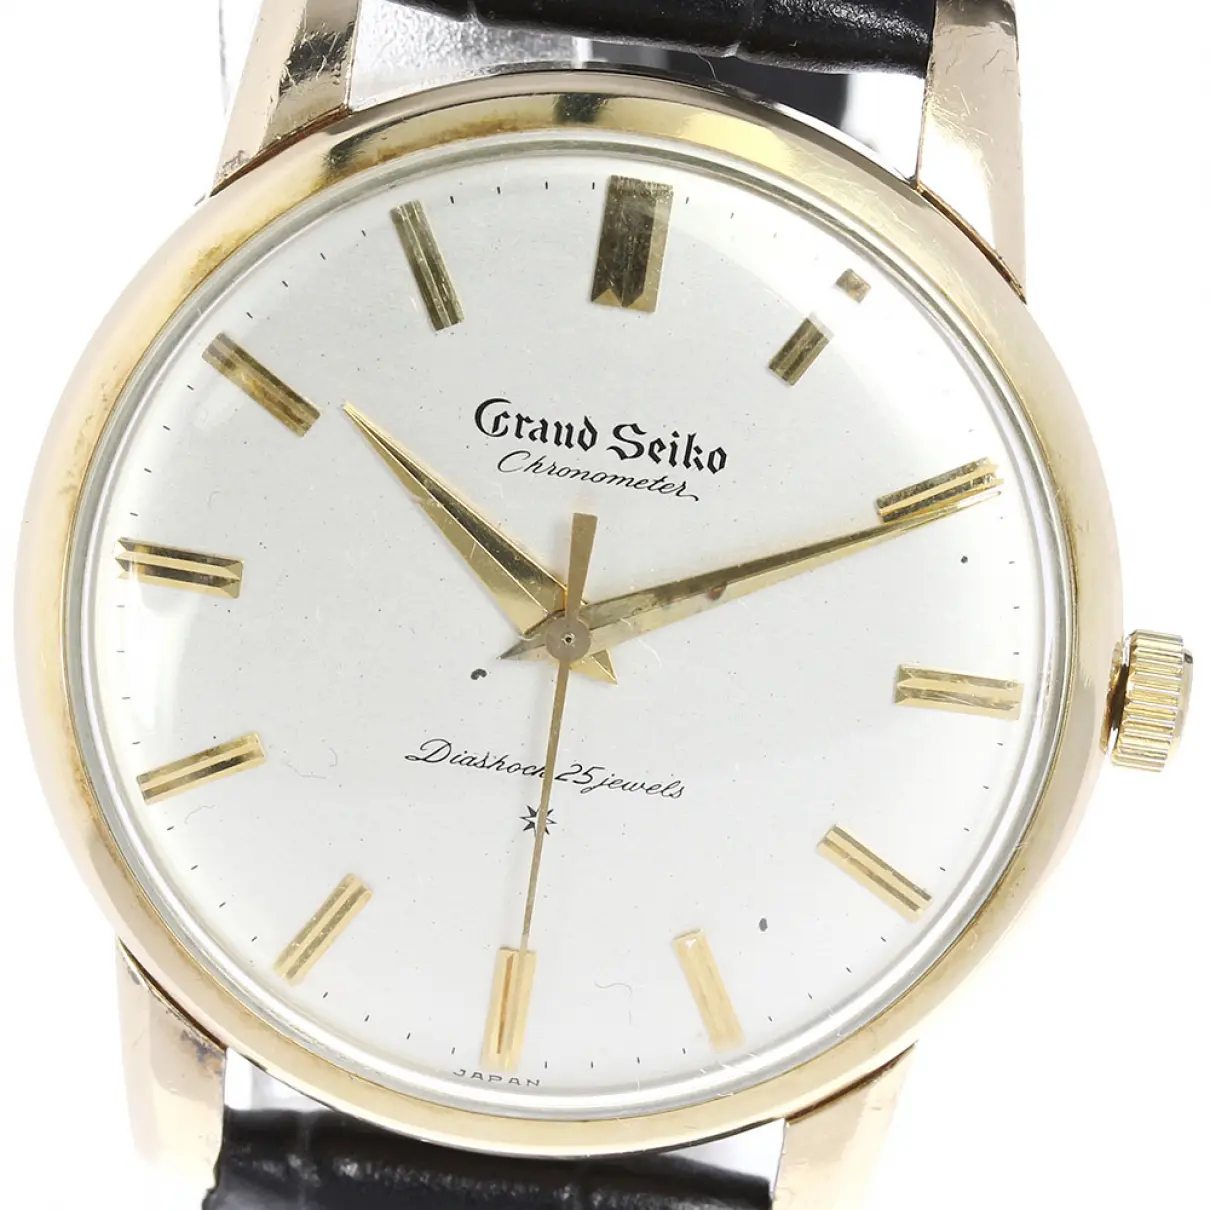 Buy Grand Seiko Watch online